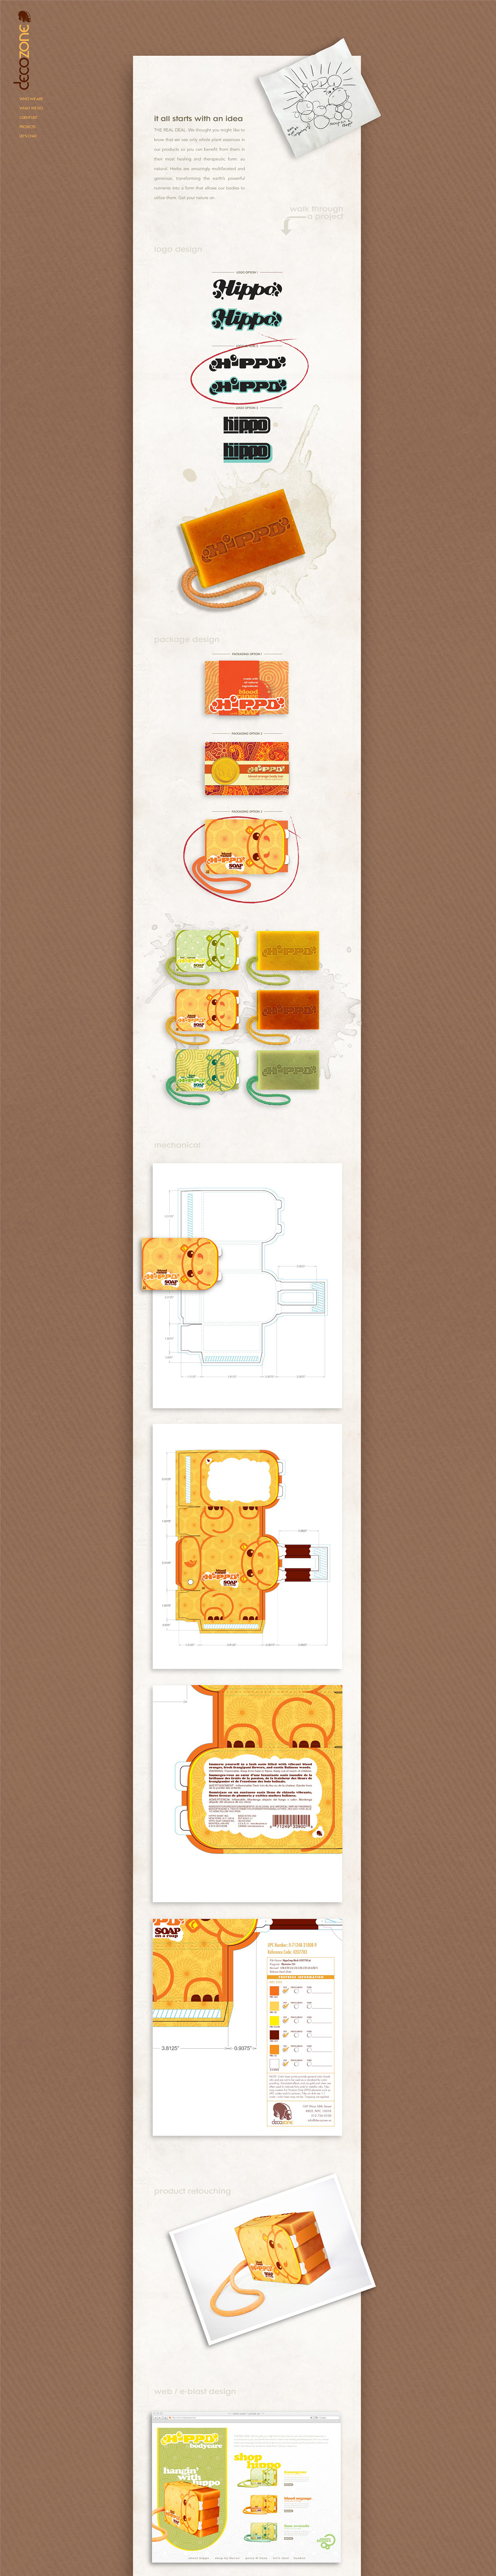 hippo soap rope orange decozone design mechanical Production Webdesign napkin die strike color break Web photo